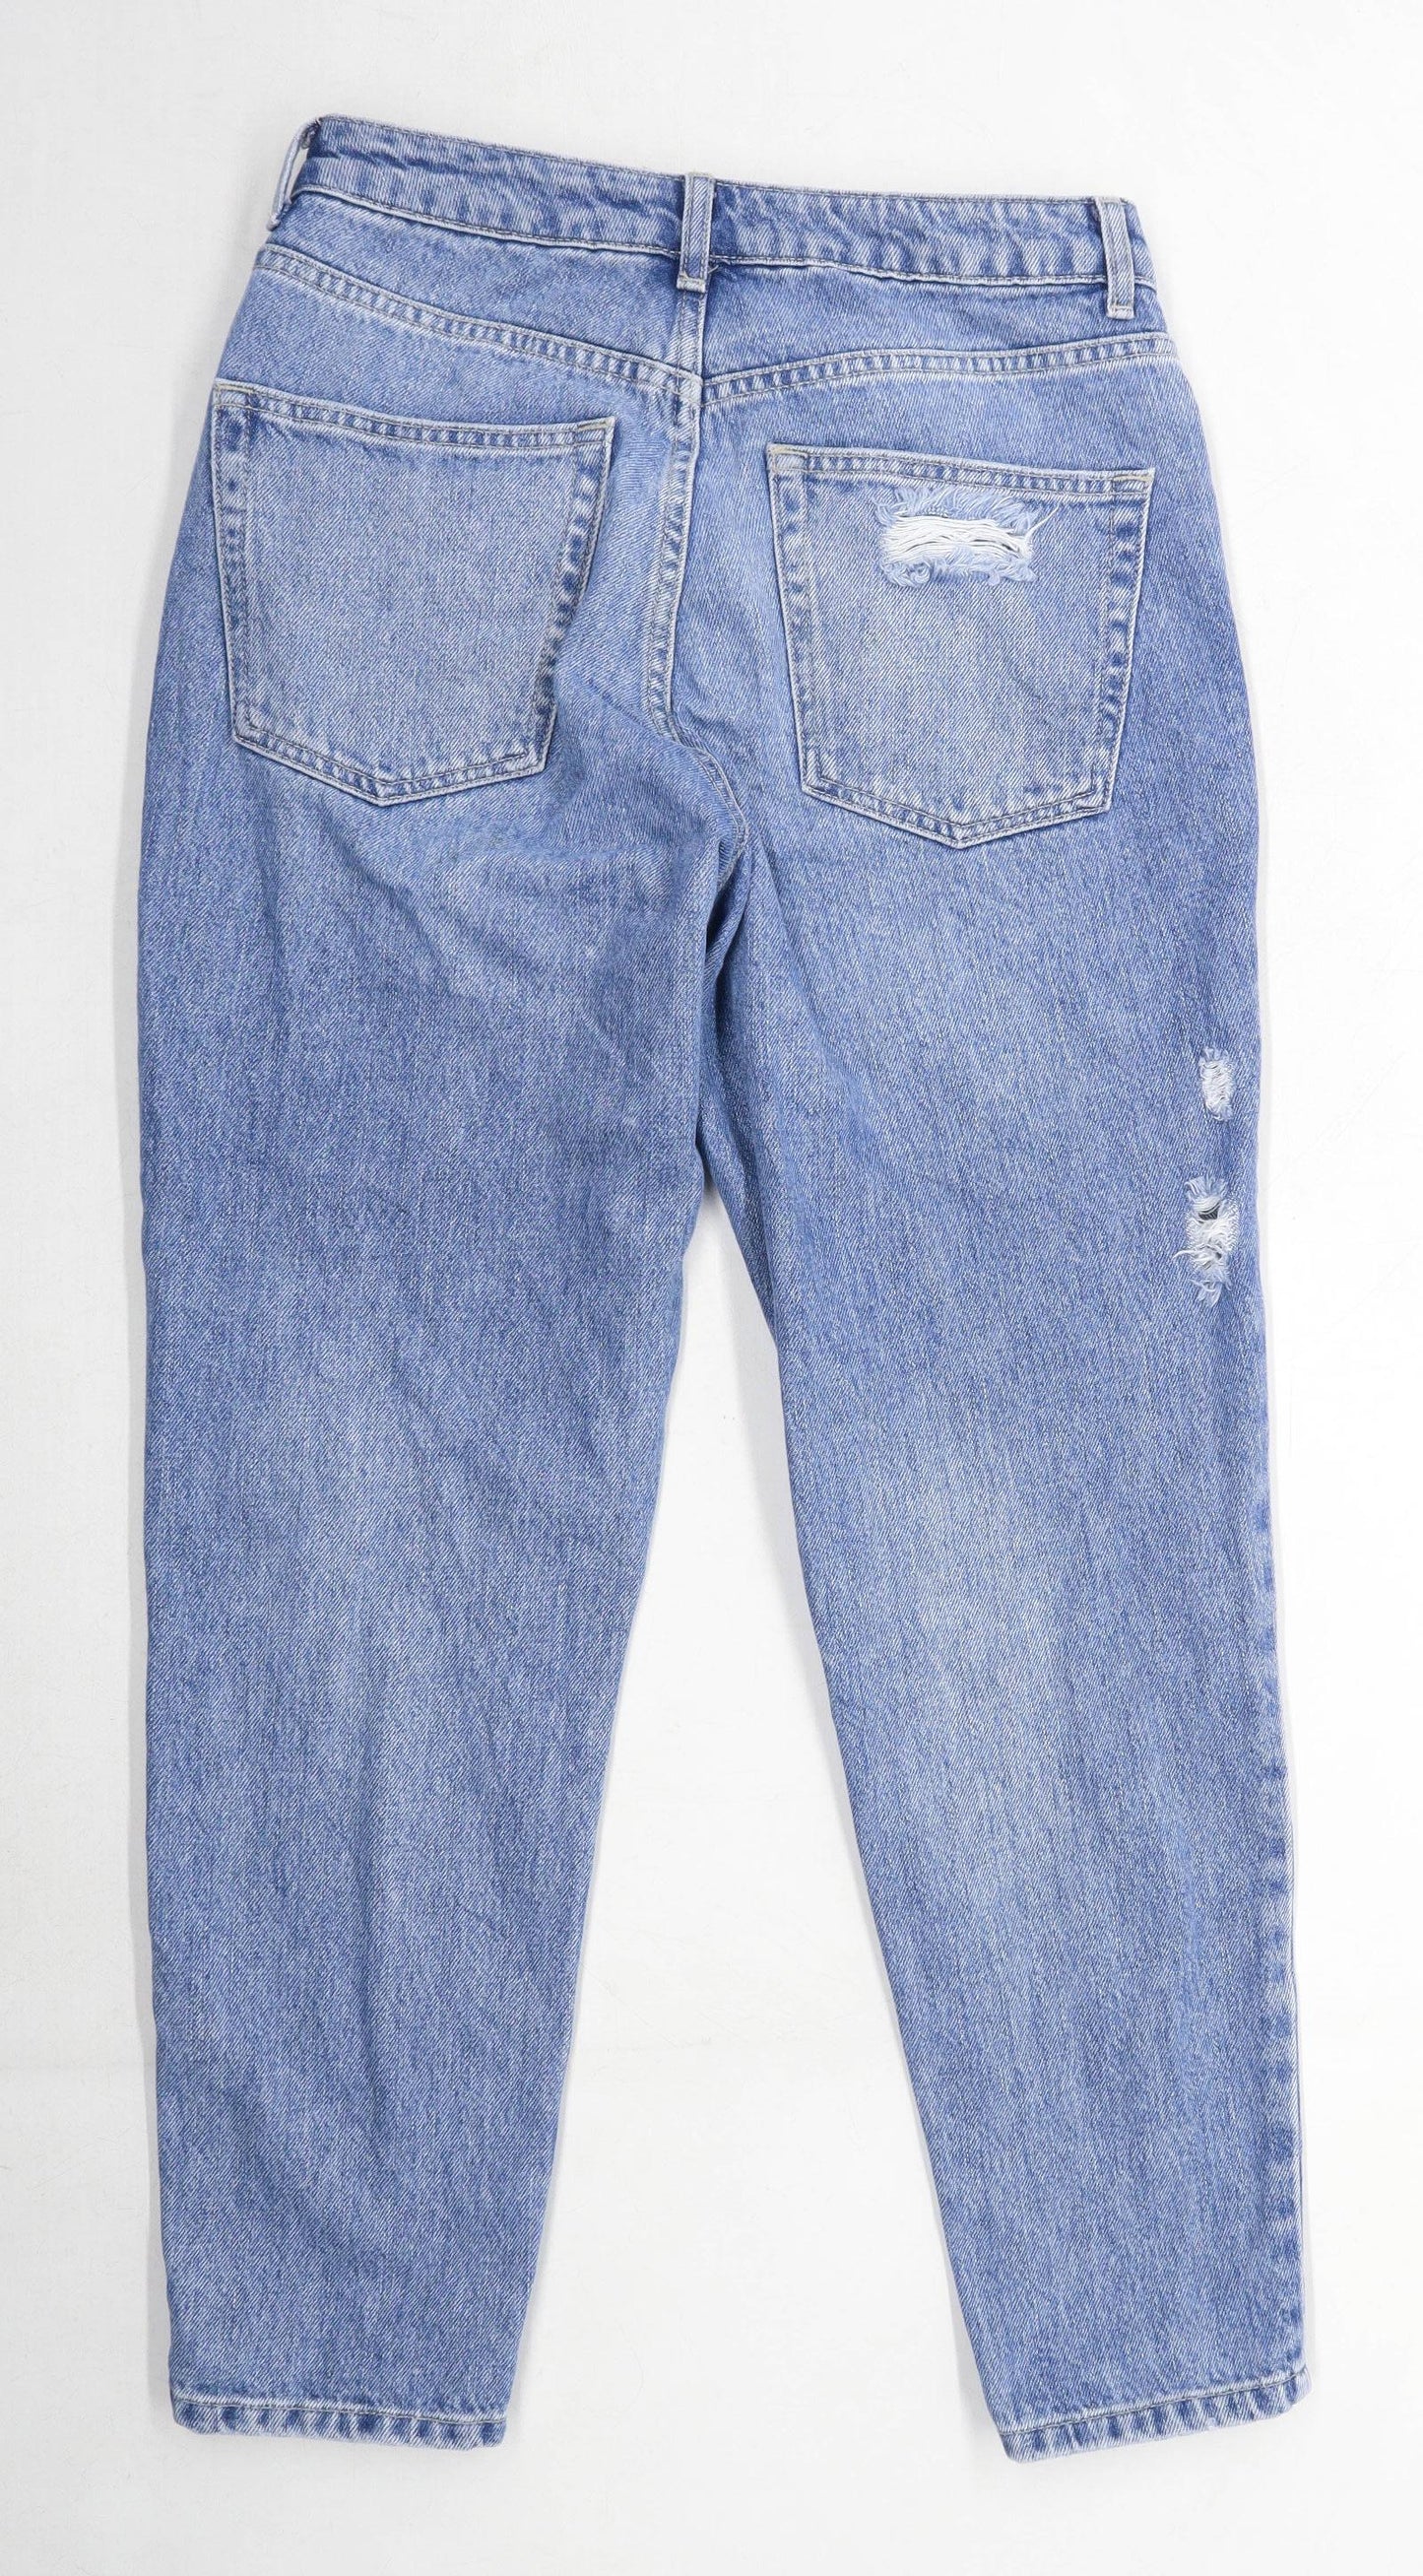 Topman Mens Blue Ripped Denim Jeans Size W28/L27